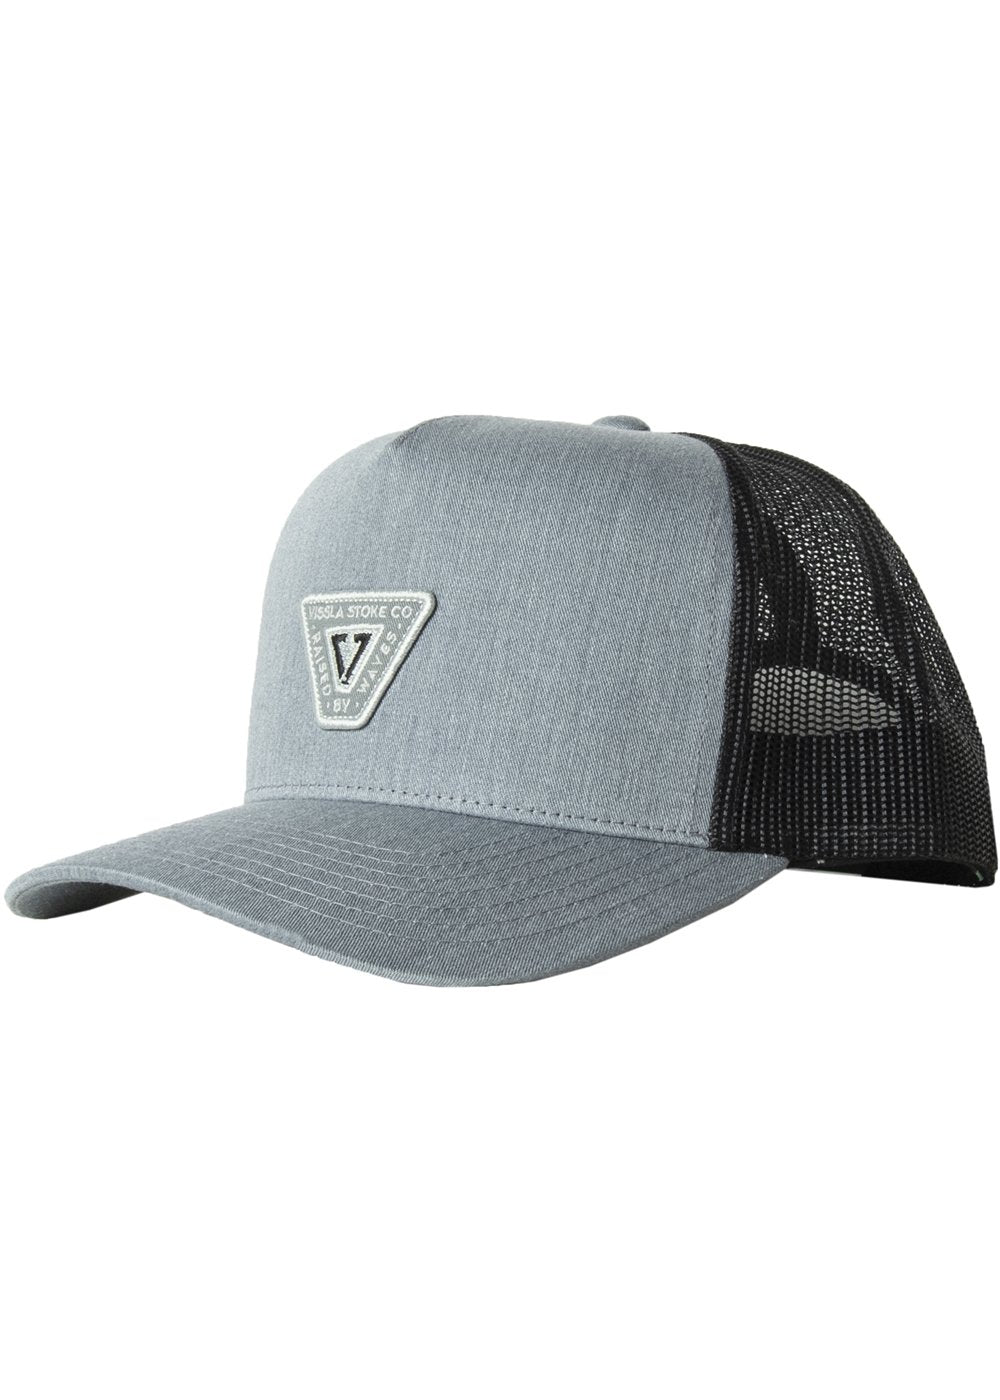 Vissla Solid Sets Eco Trucker Hat (Grey Heather 2) - KS Boardriders Surf Shop